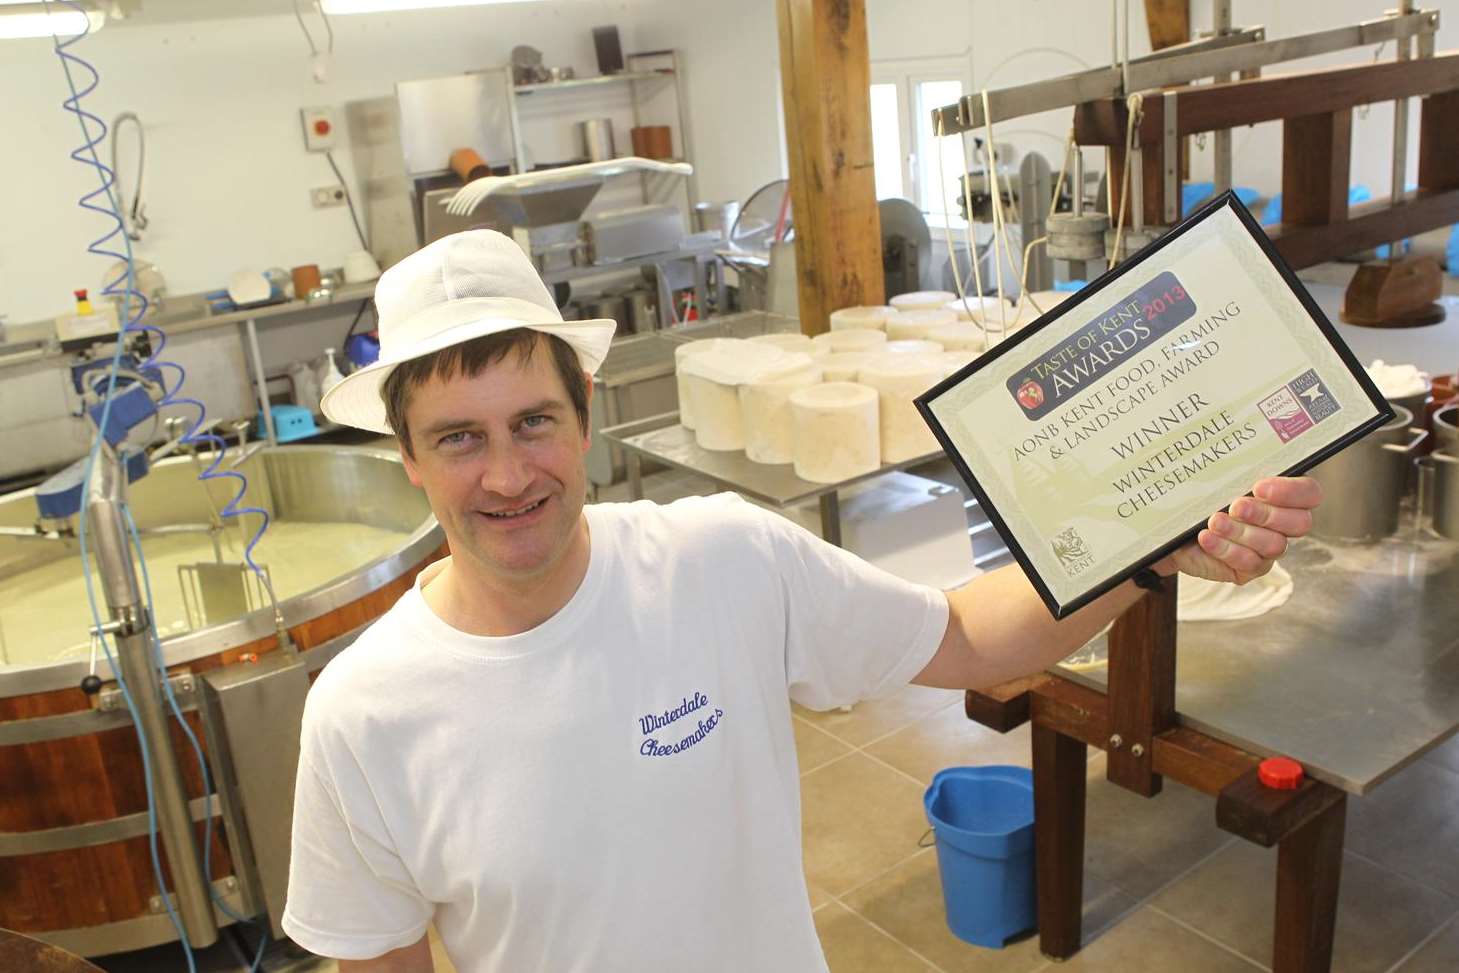 Robin Betts, owner of Winterdale Cheesemakers in Wrotham, is a former award winner